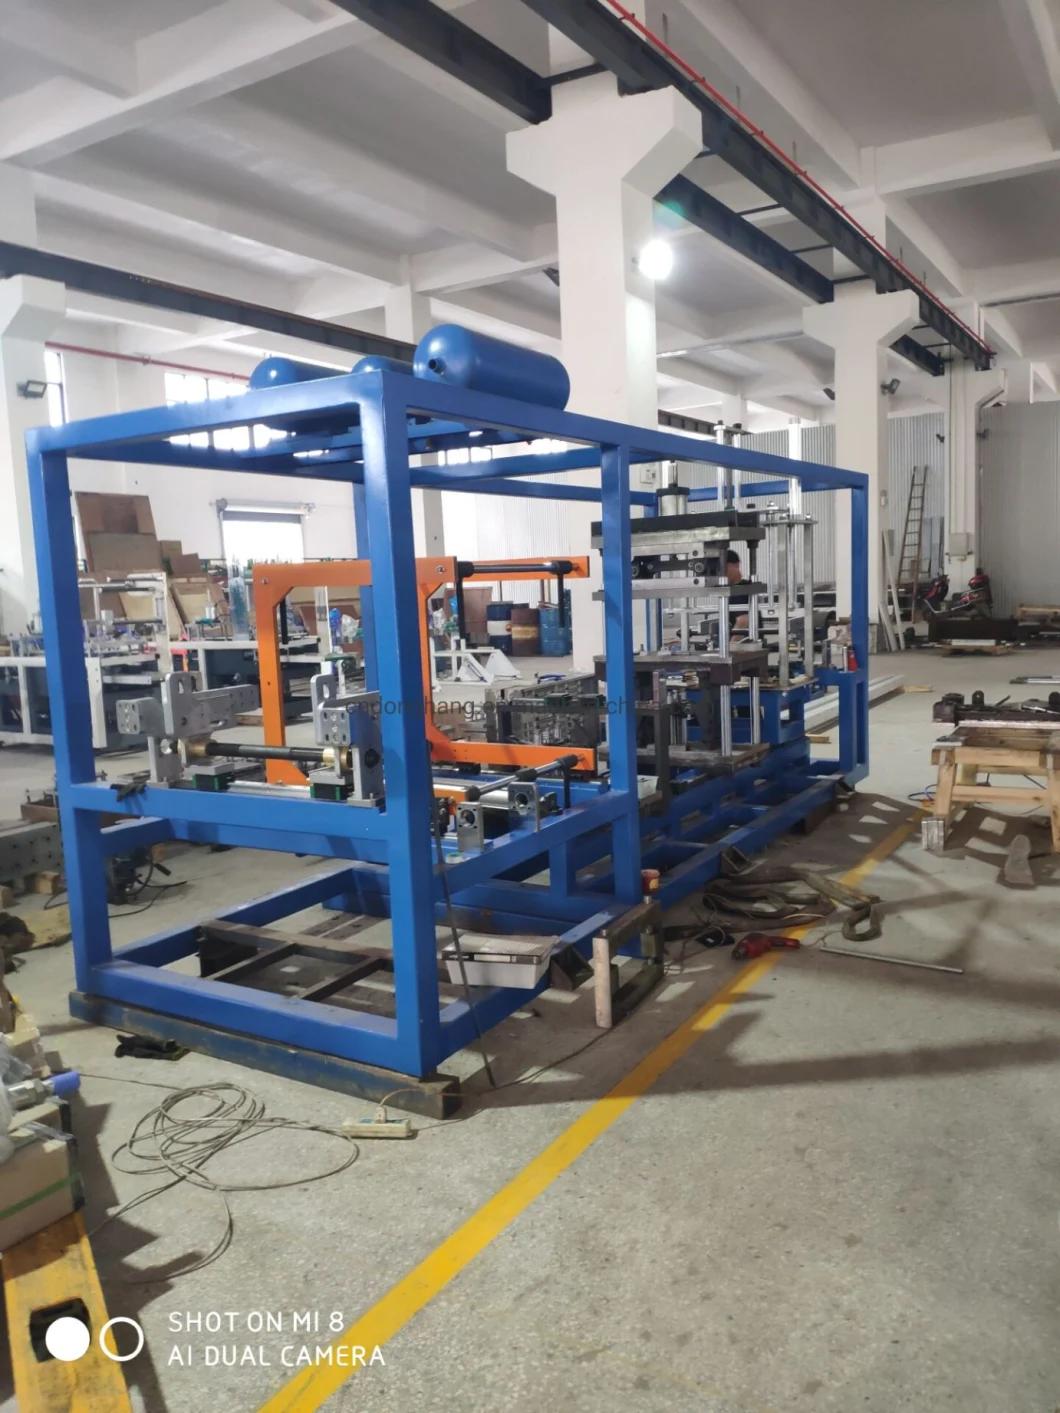 Ruian Donghang PP/Pet/PS Tray Thermoforming Machine